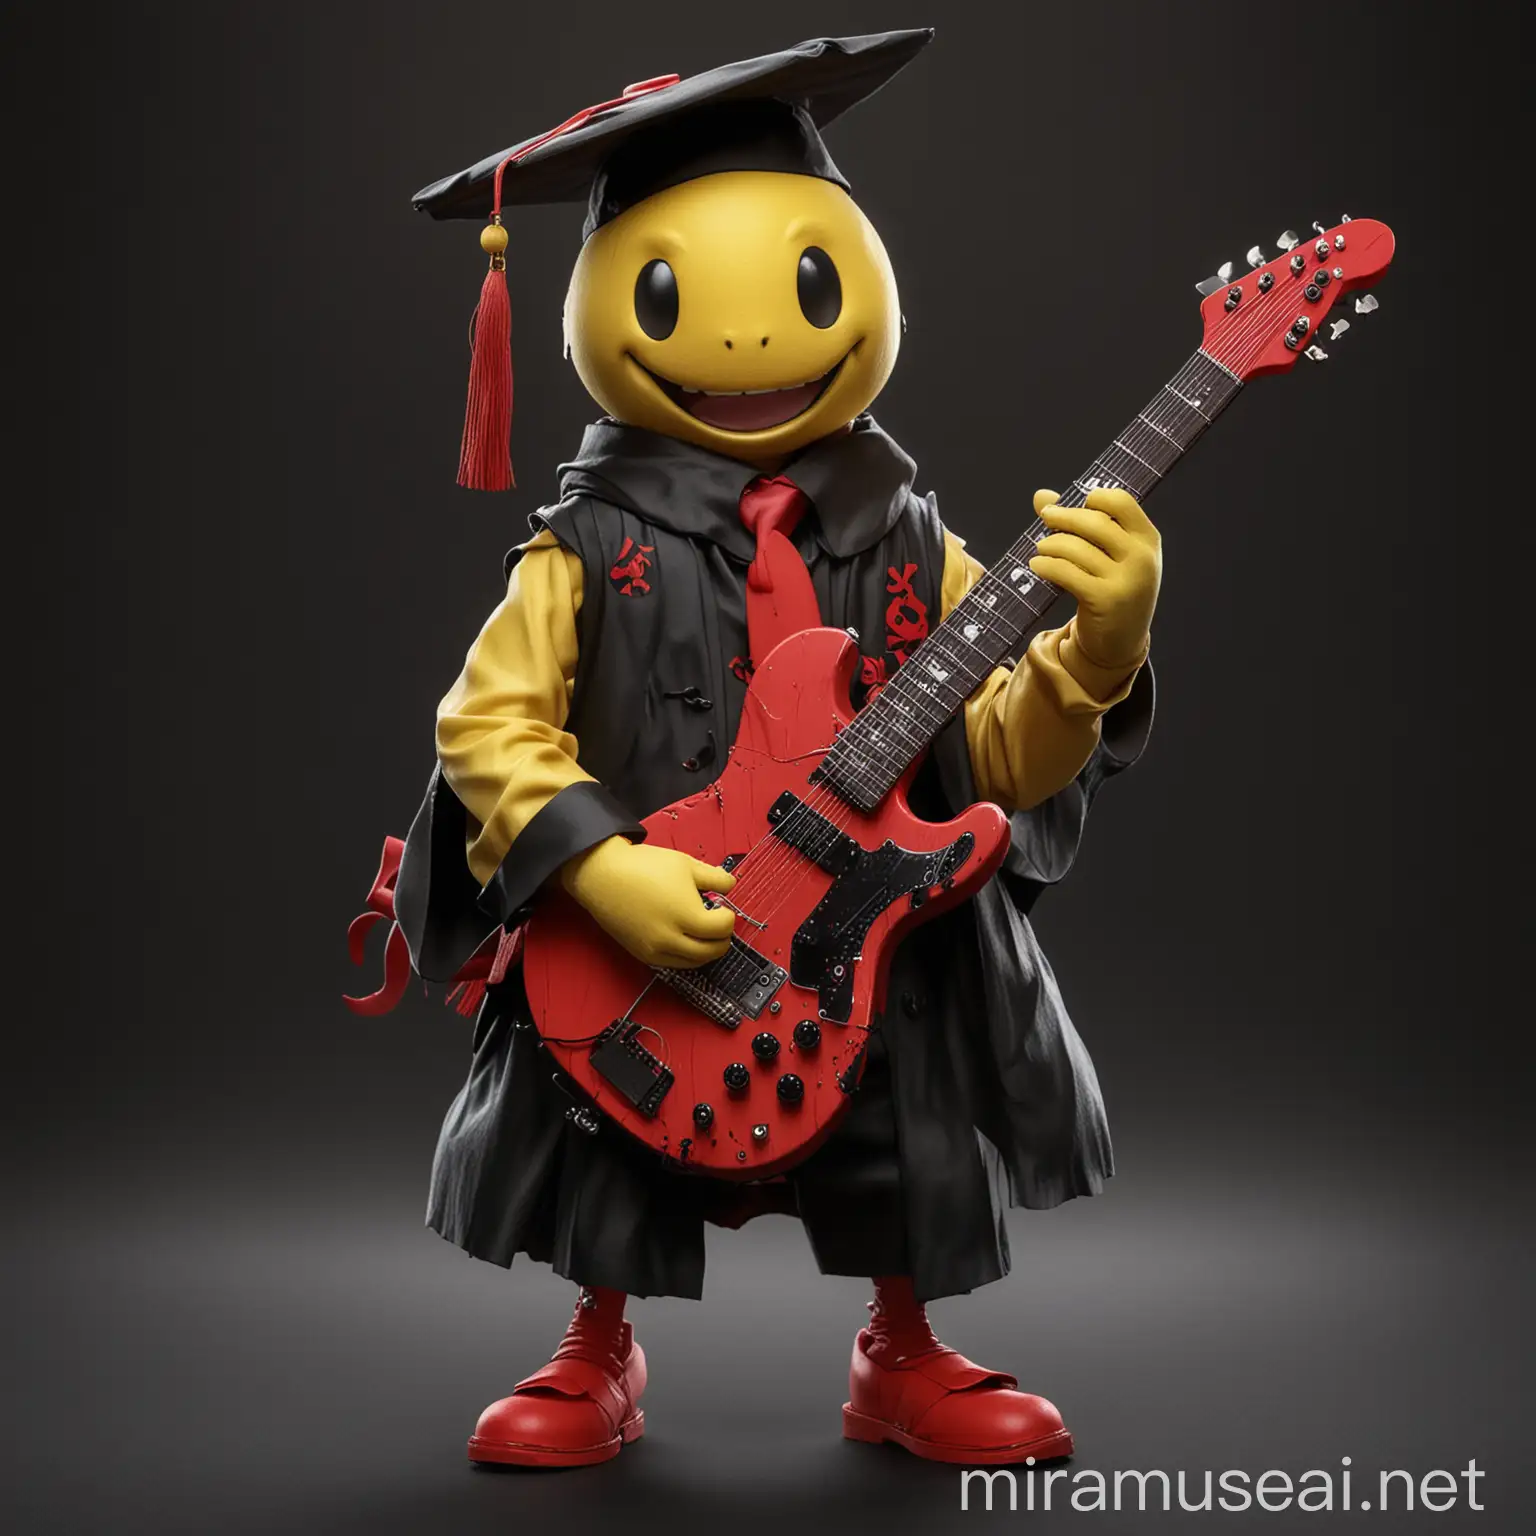 Koro Sensei Rocking Graduation Electric Red Guitar in Hand